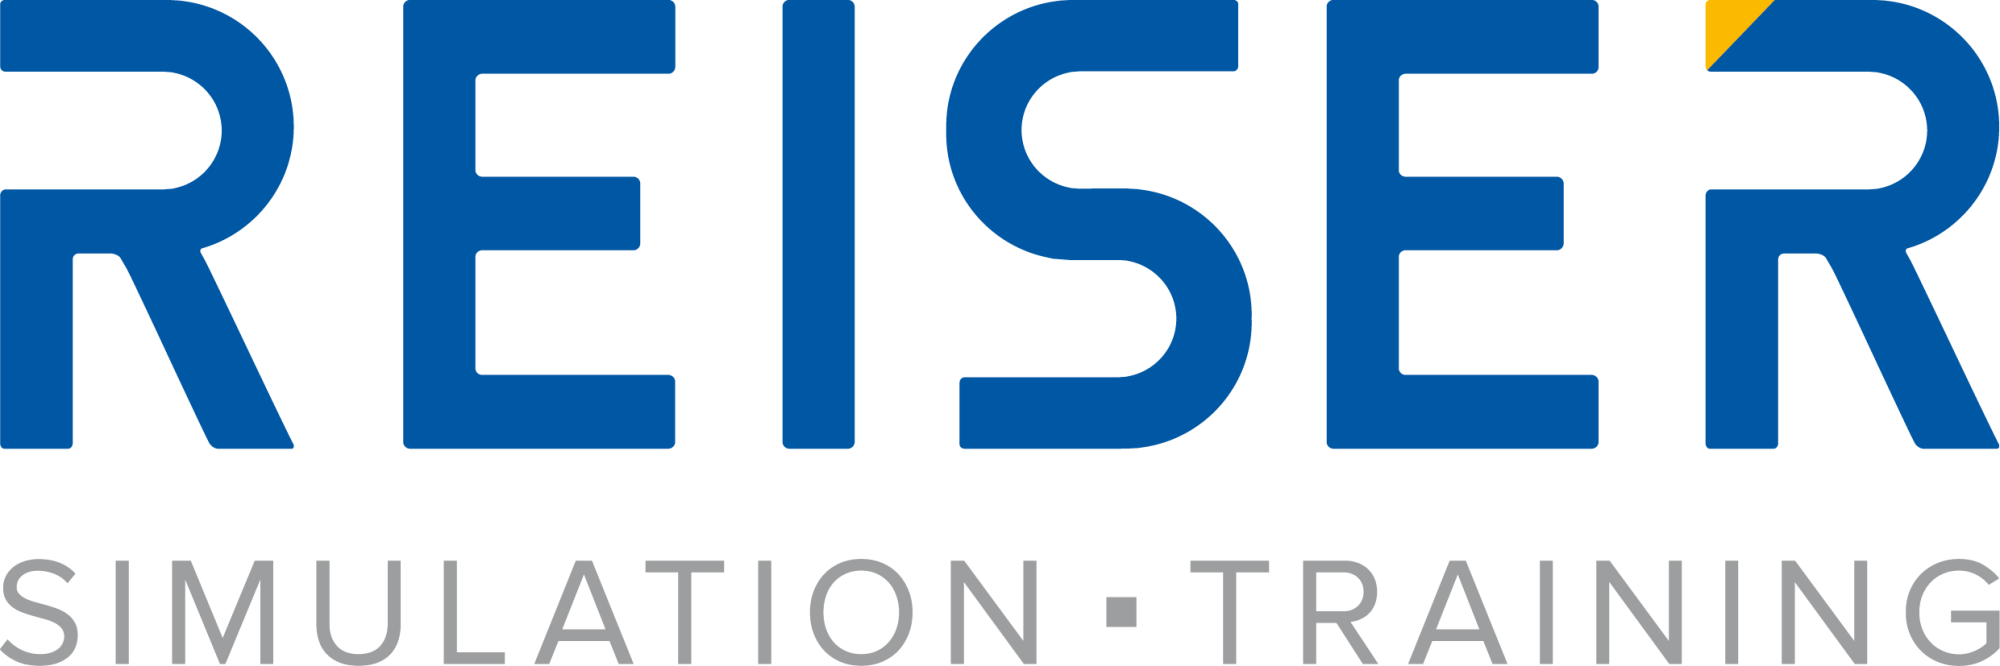 RST-Logo-Claim-rgb-positiv-Rz.png